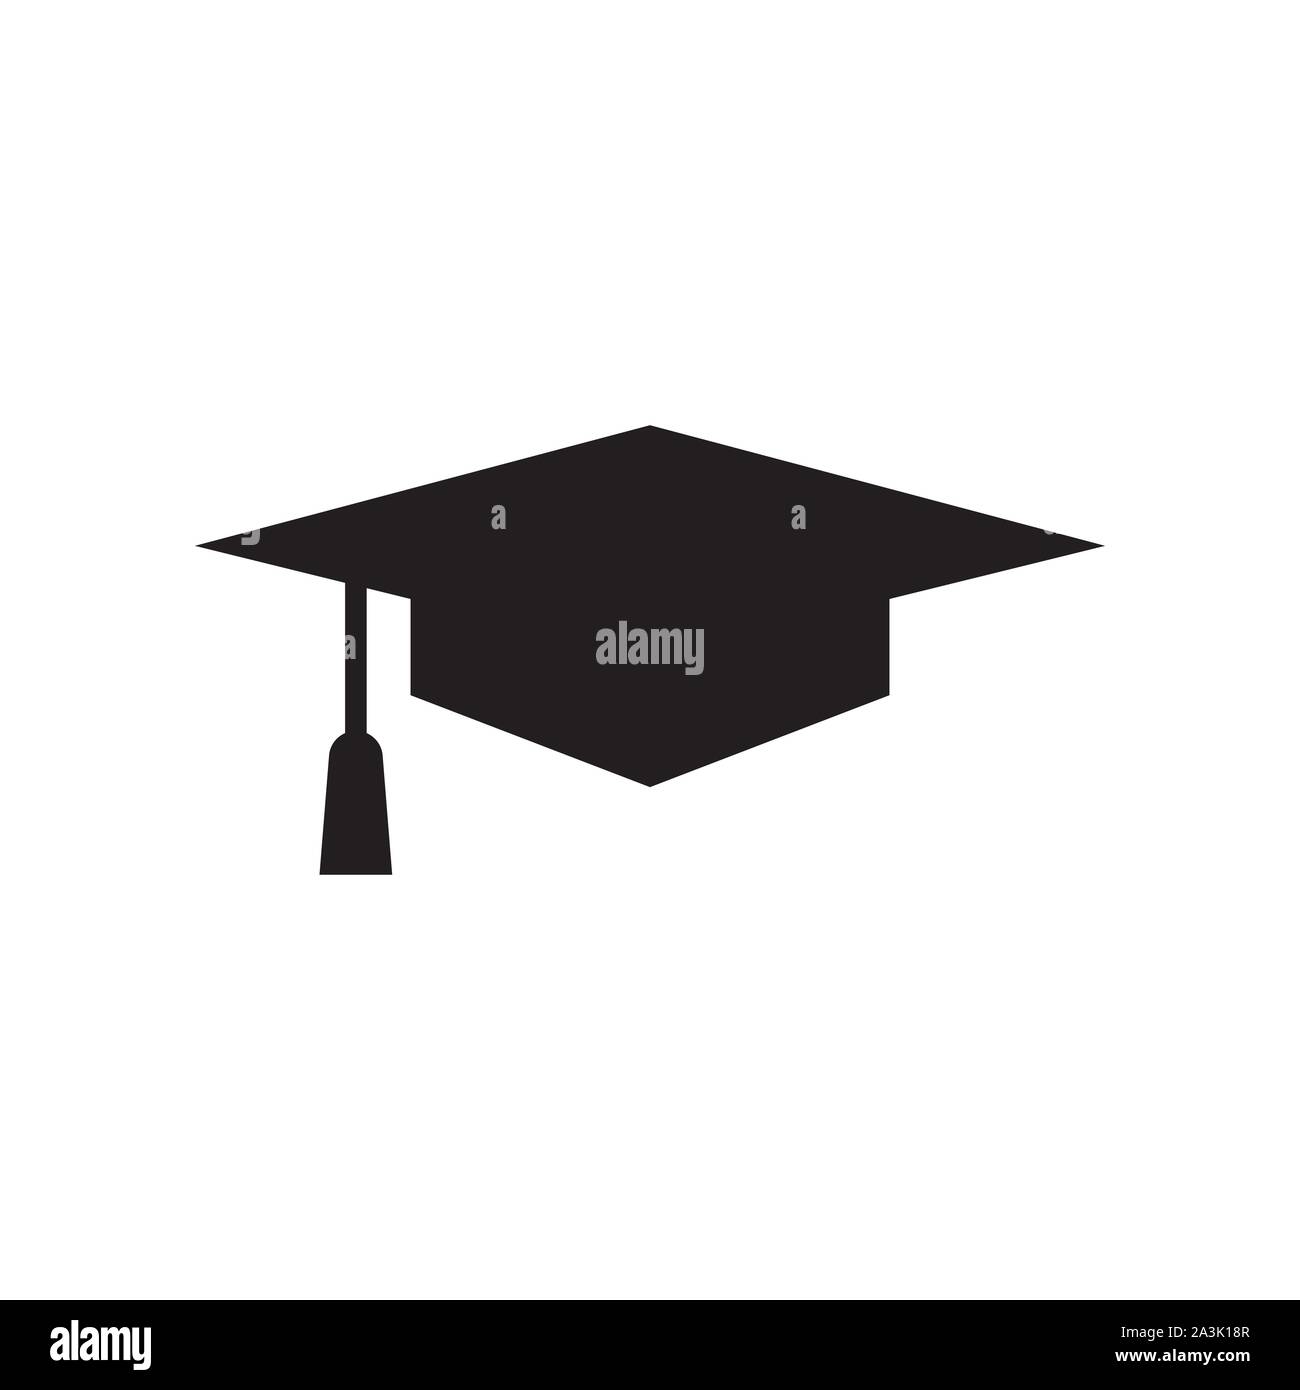 Graduation Cap Graphic by cagakluas · Creative Fabrica